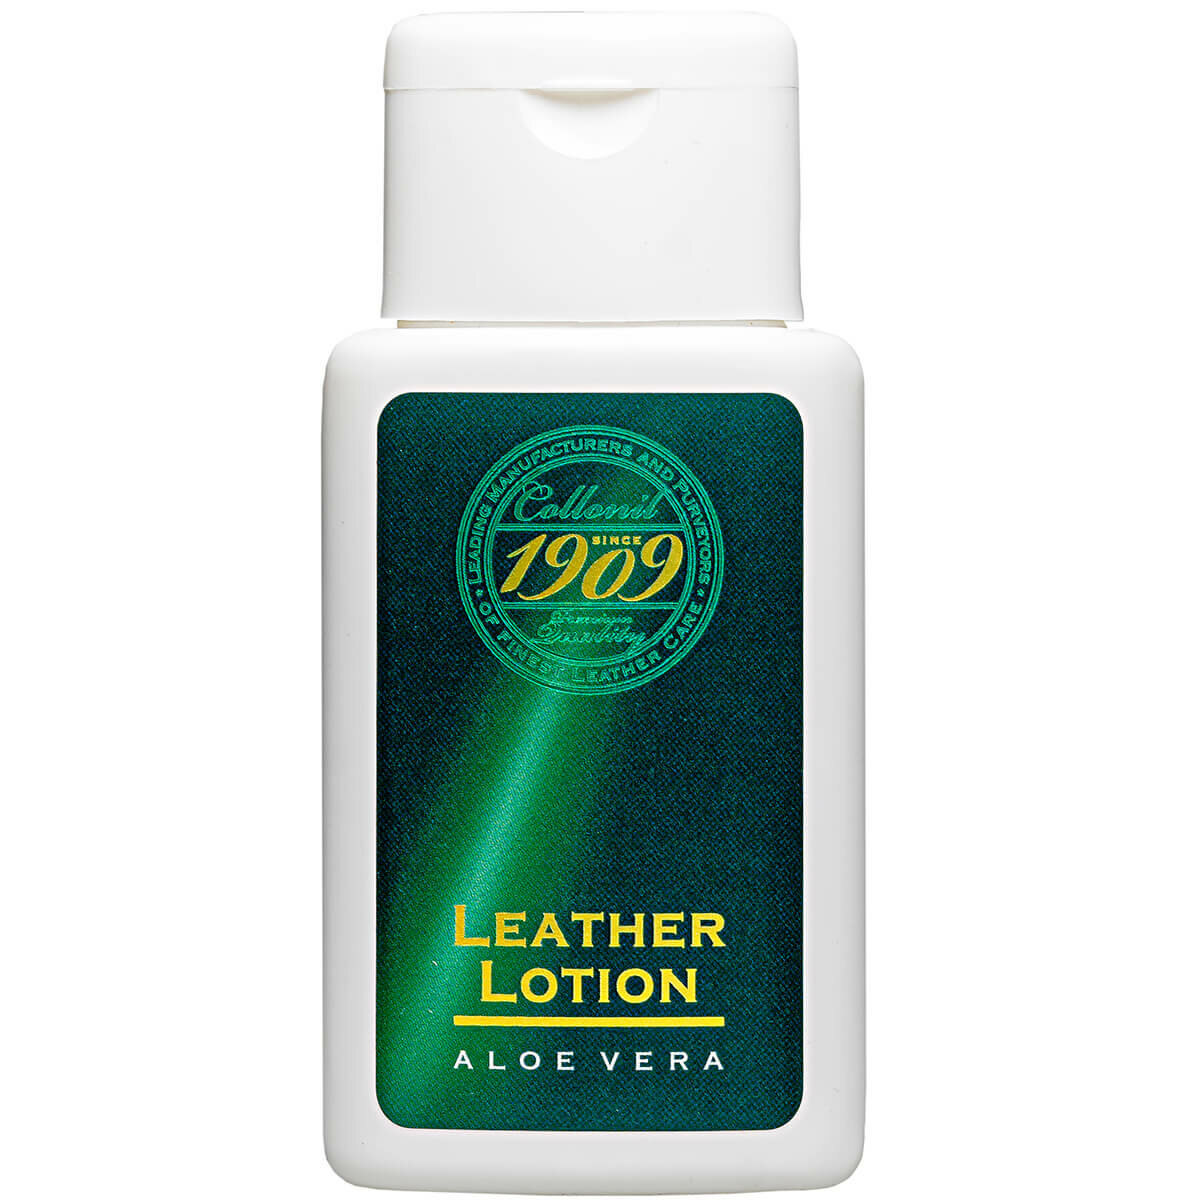 Лосьон для защиты и ухода за гладкой кожей Collonil, 1909 Leather Lotion, 100 ml